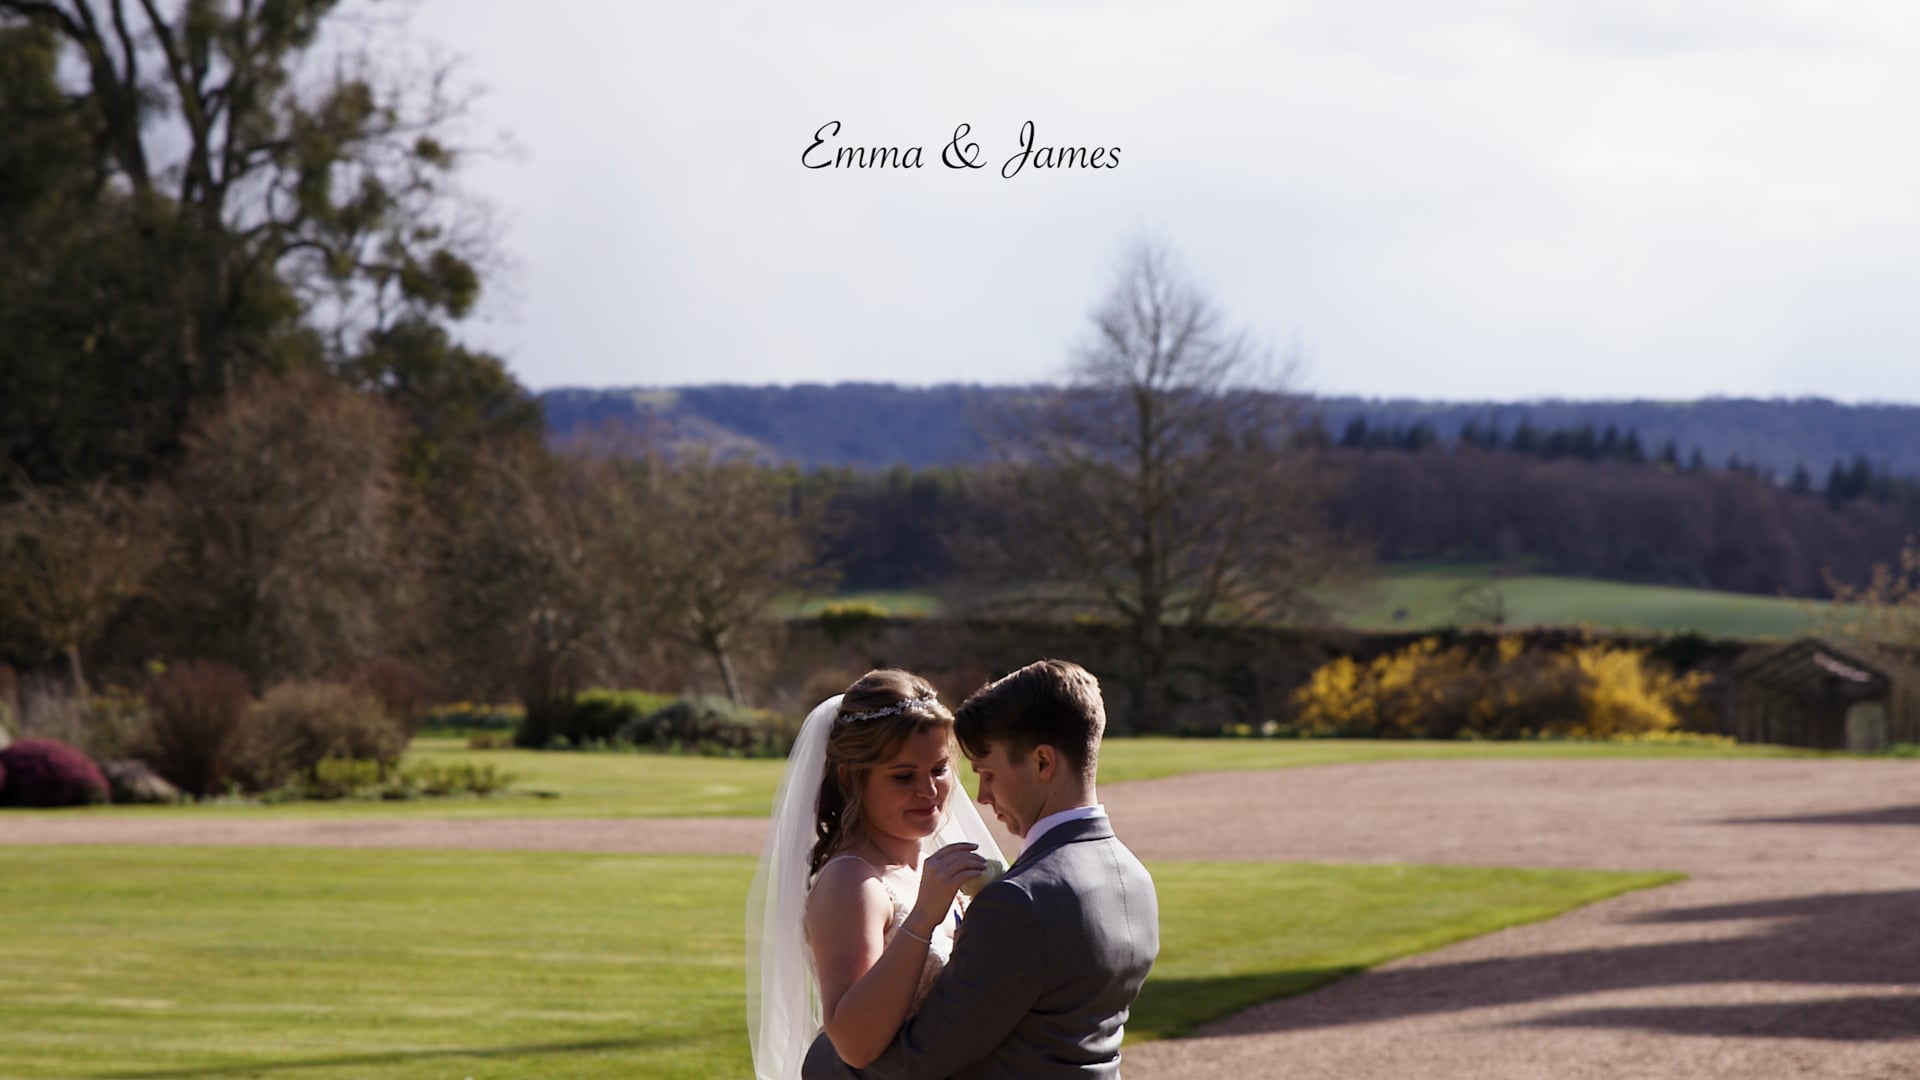 Emma & James - Wedding Highlights (Event)